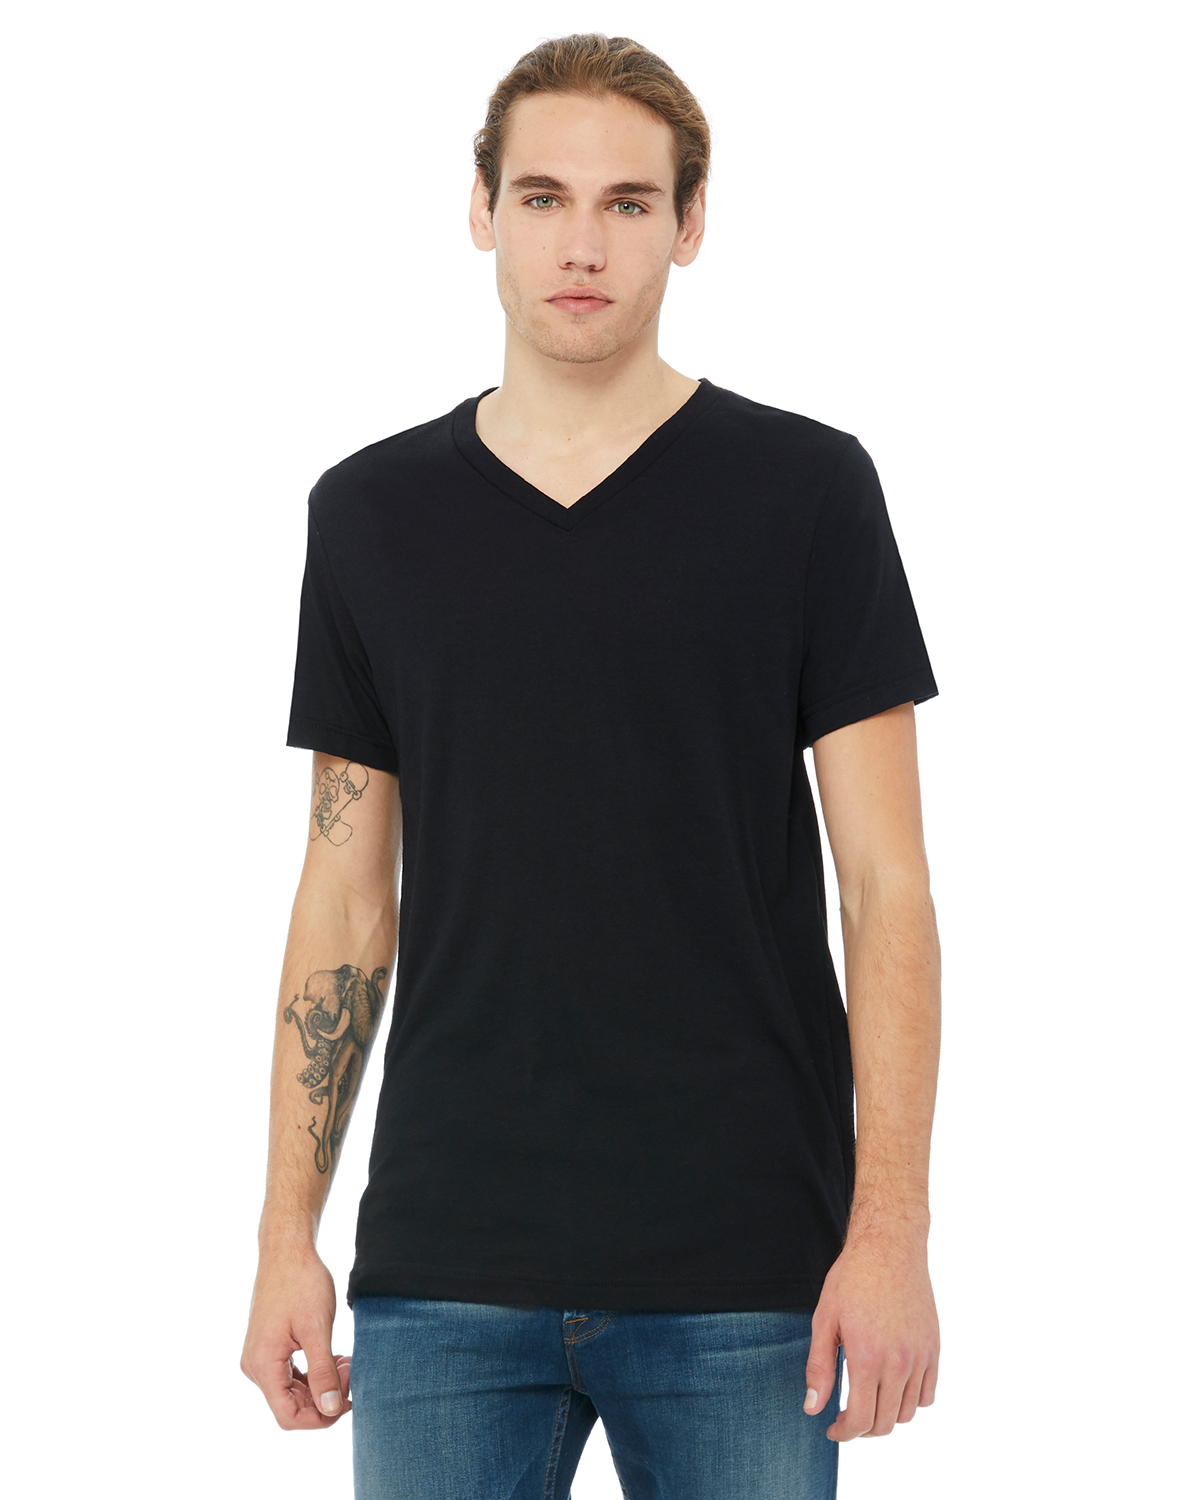 Bella C3415 - Unisex TriBlend Short-Sleeve Deep V-Neck Tee $7.45 - T-Shirts